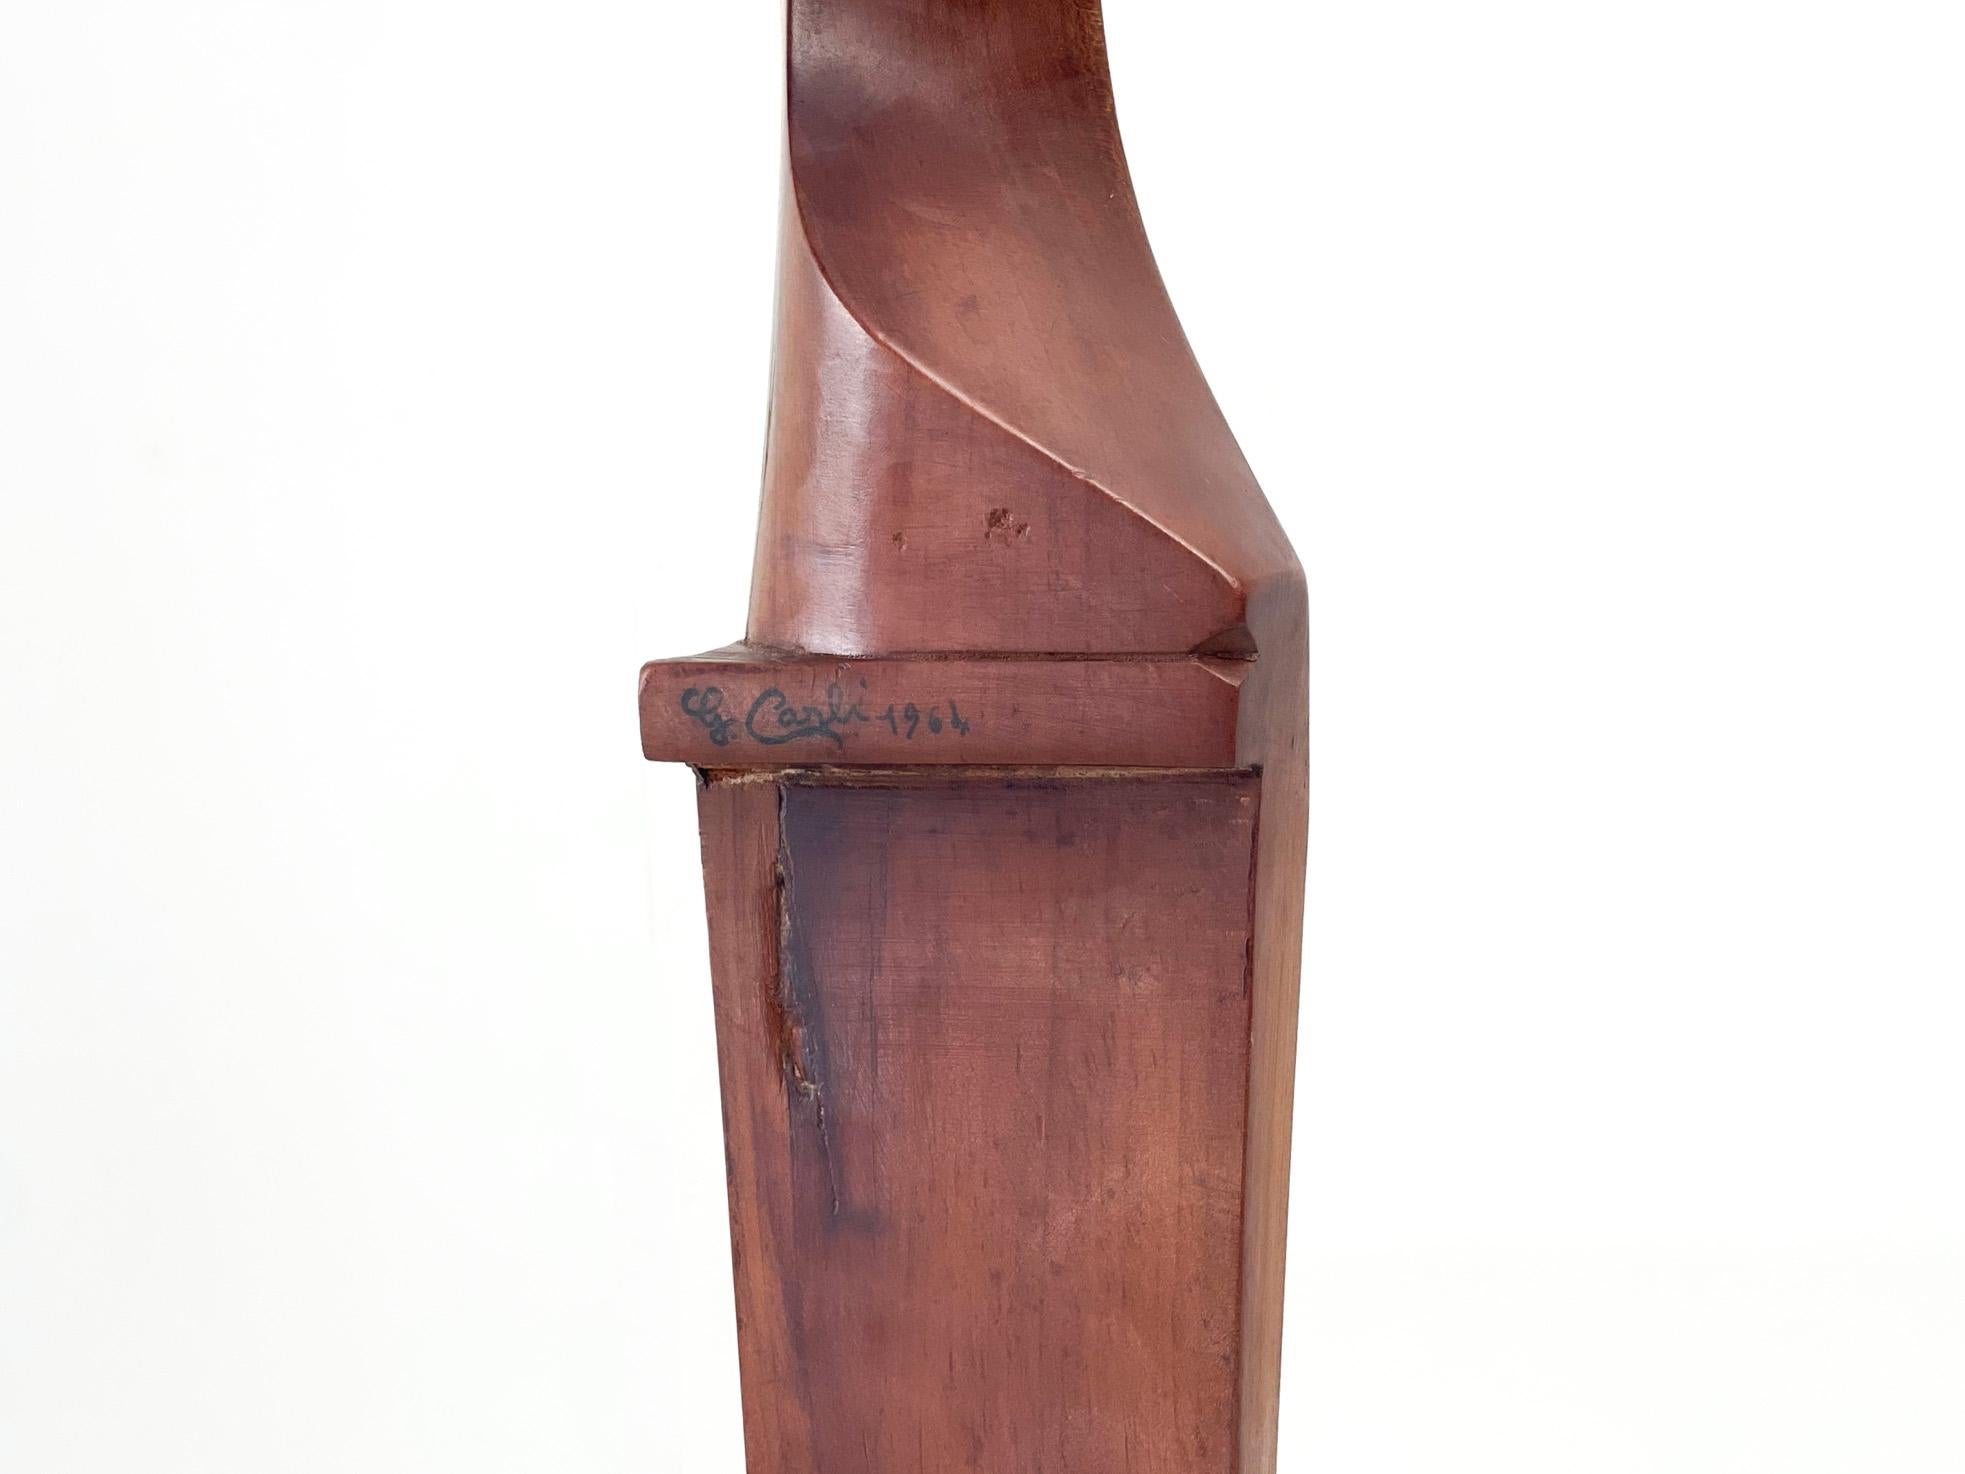 Giuseppe Carli abstract wooden sculpture In Good Condition For Sale In Nijlen, VAN